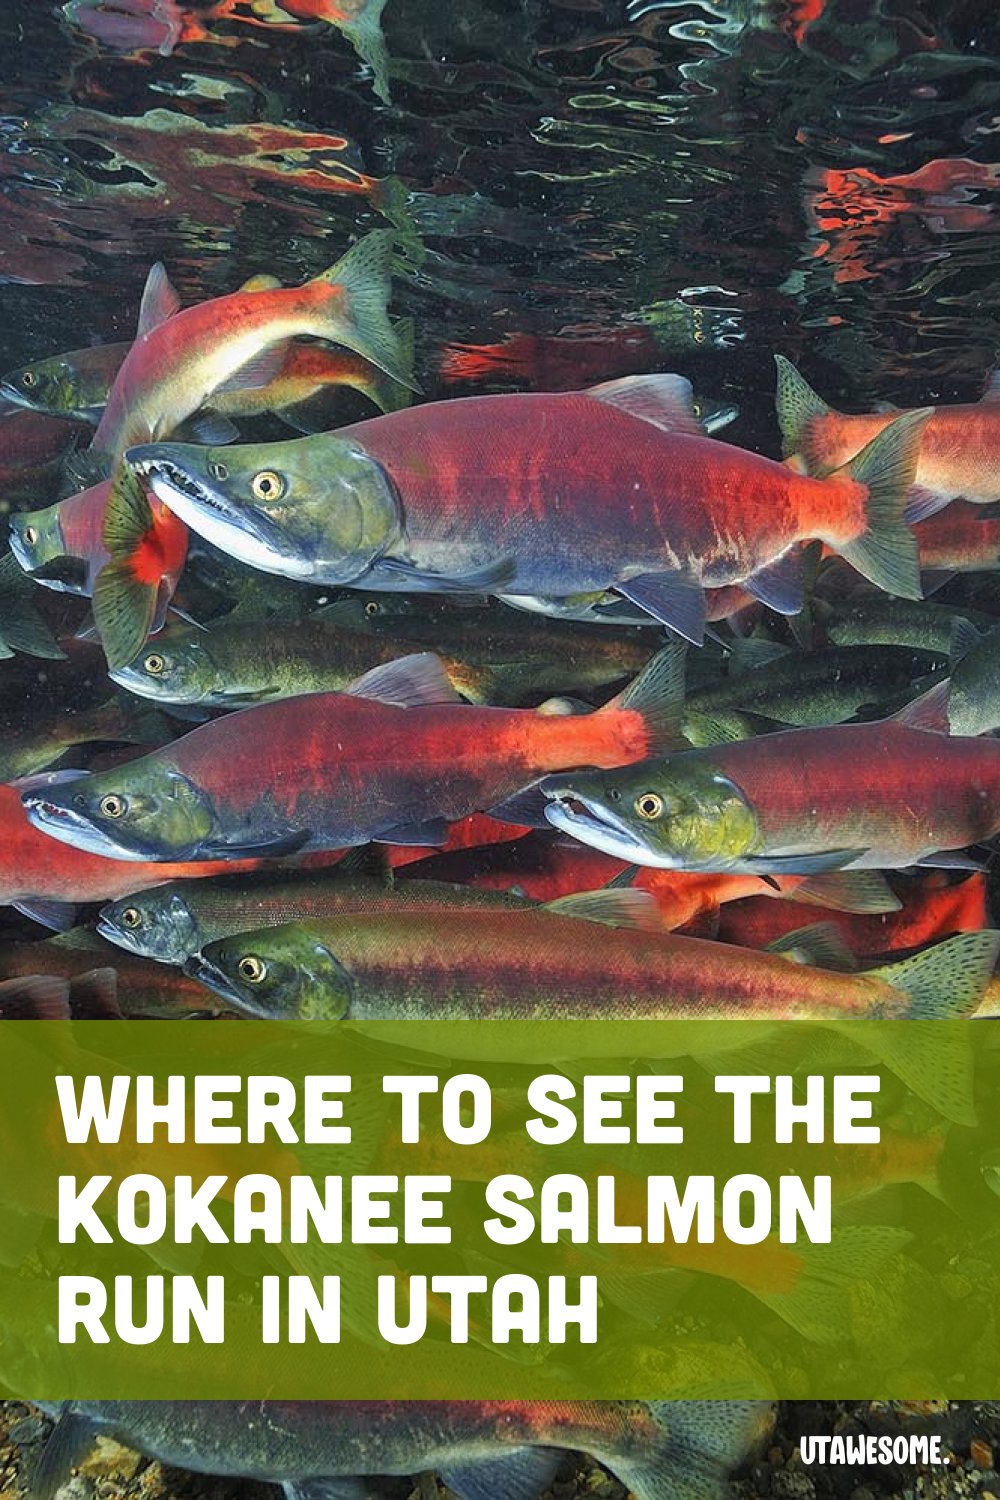 Kokanee Salmon Run in Utah